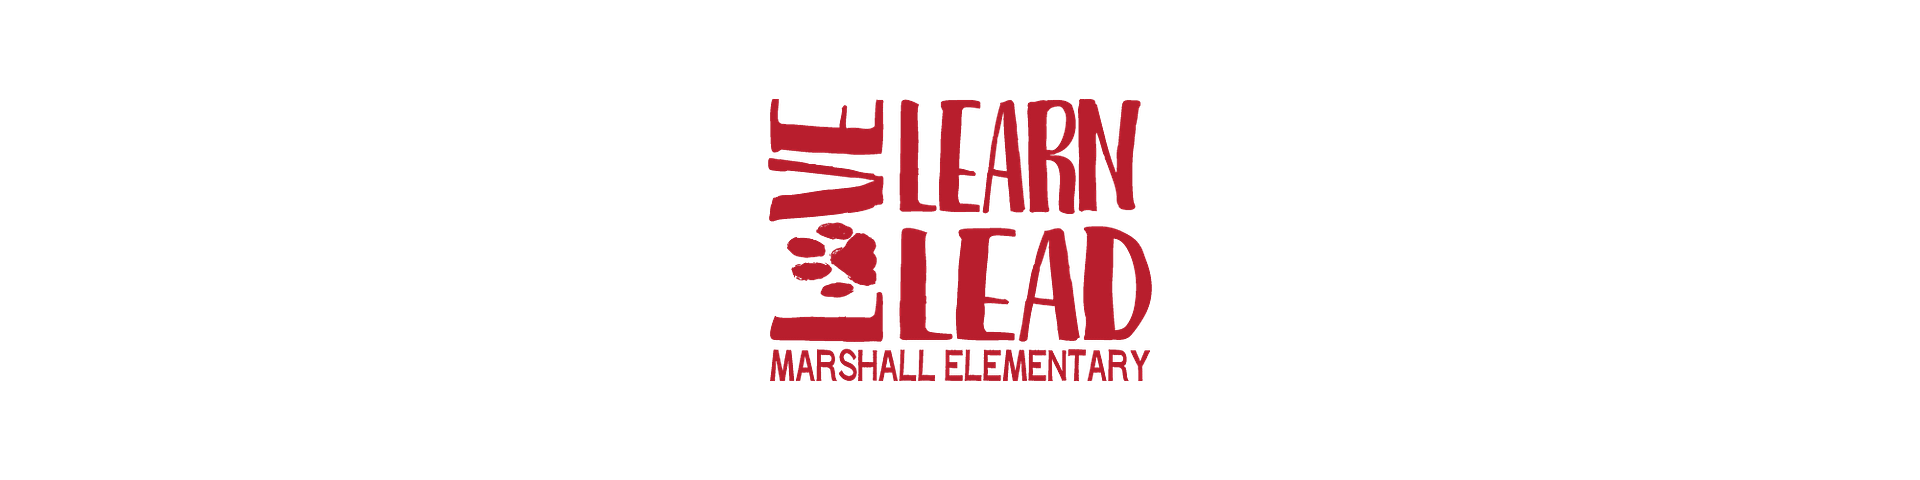 Marshall Elementary 2021